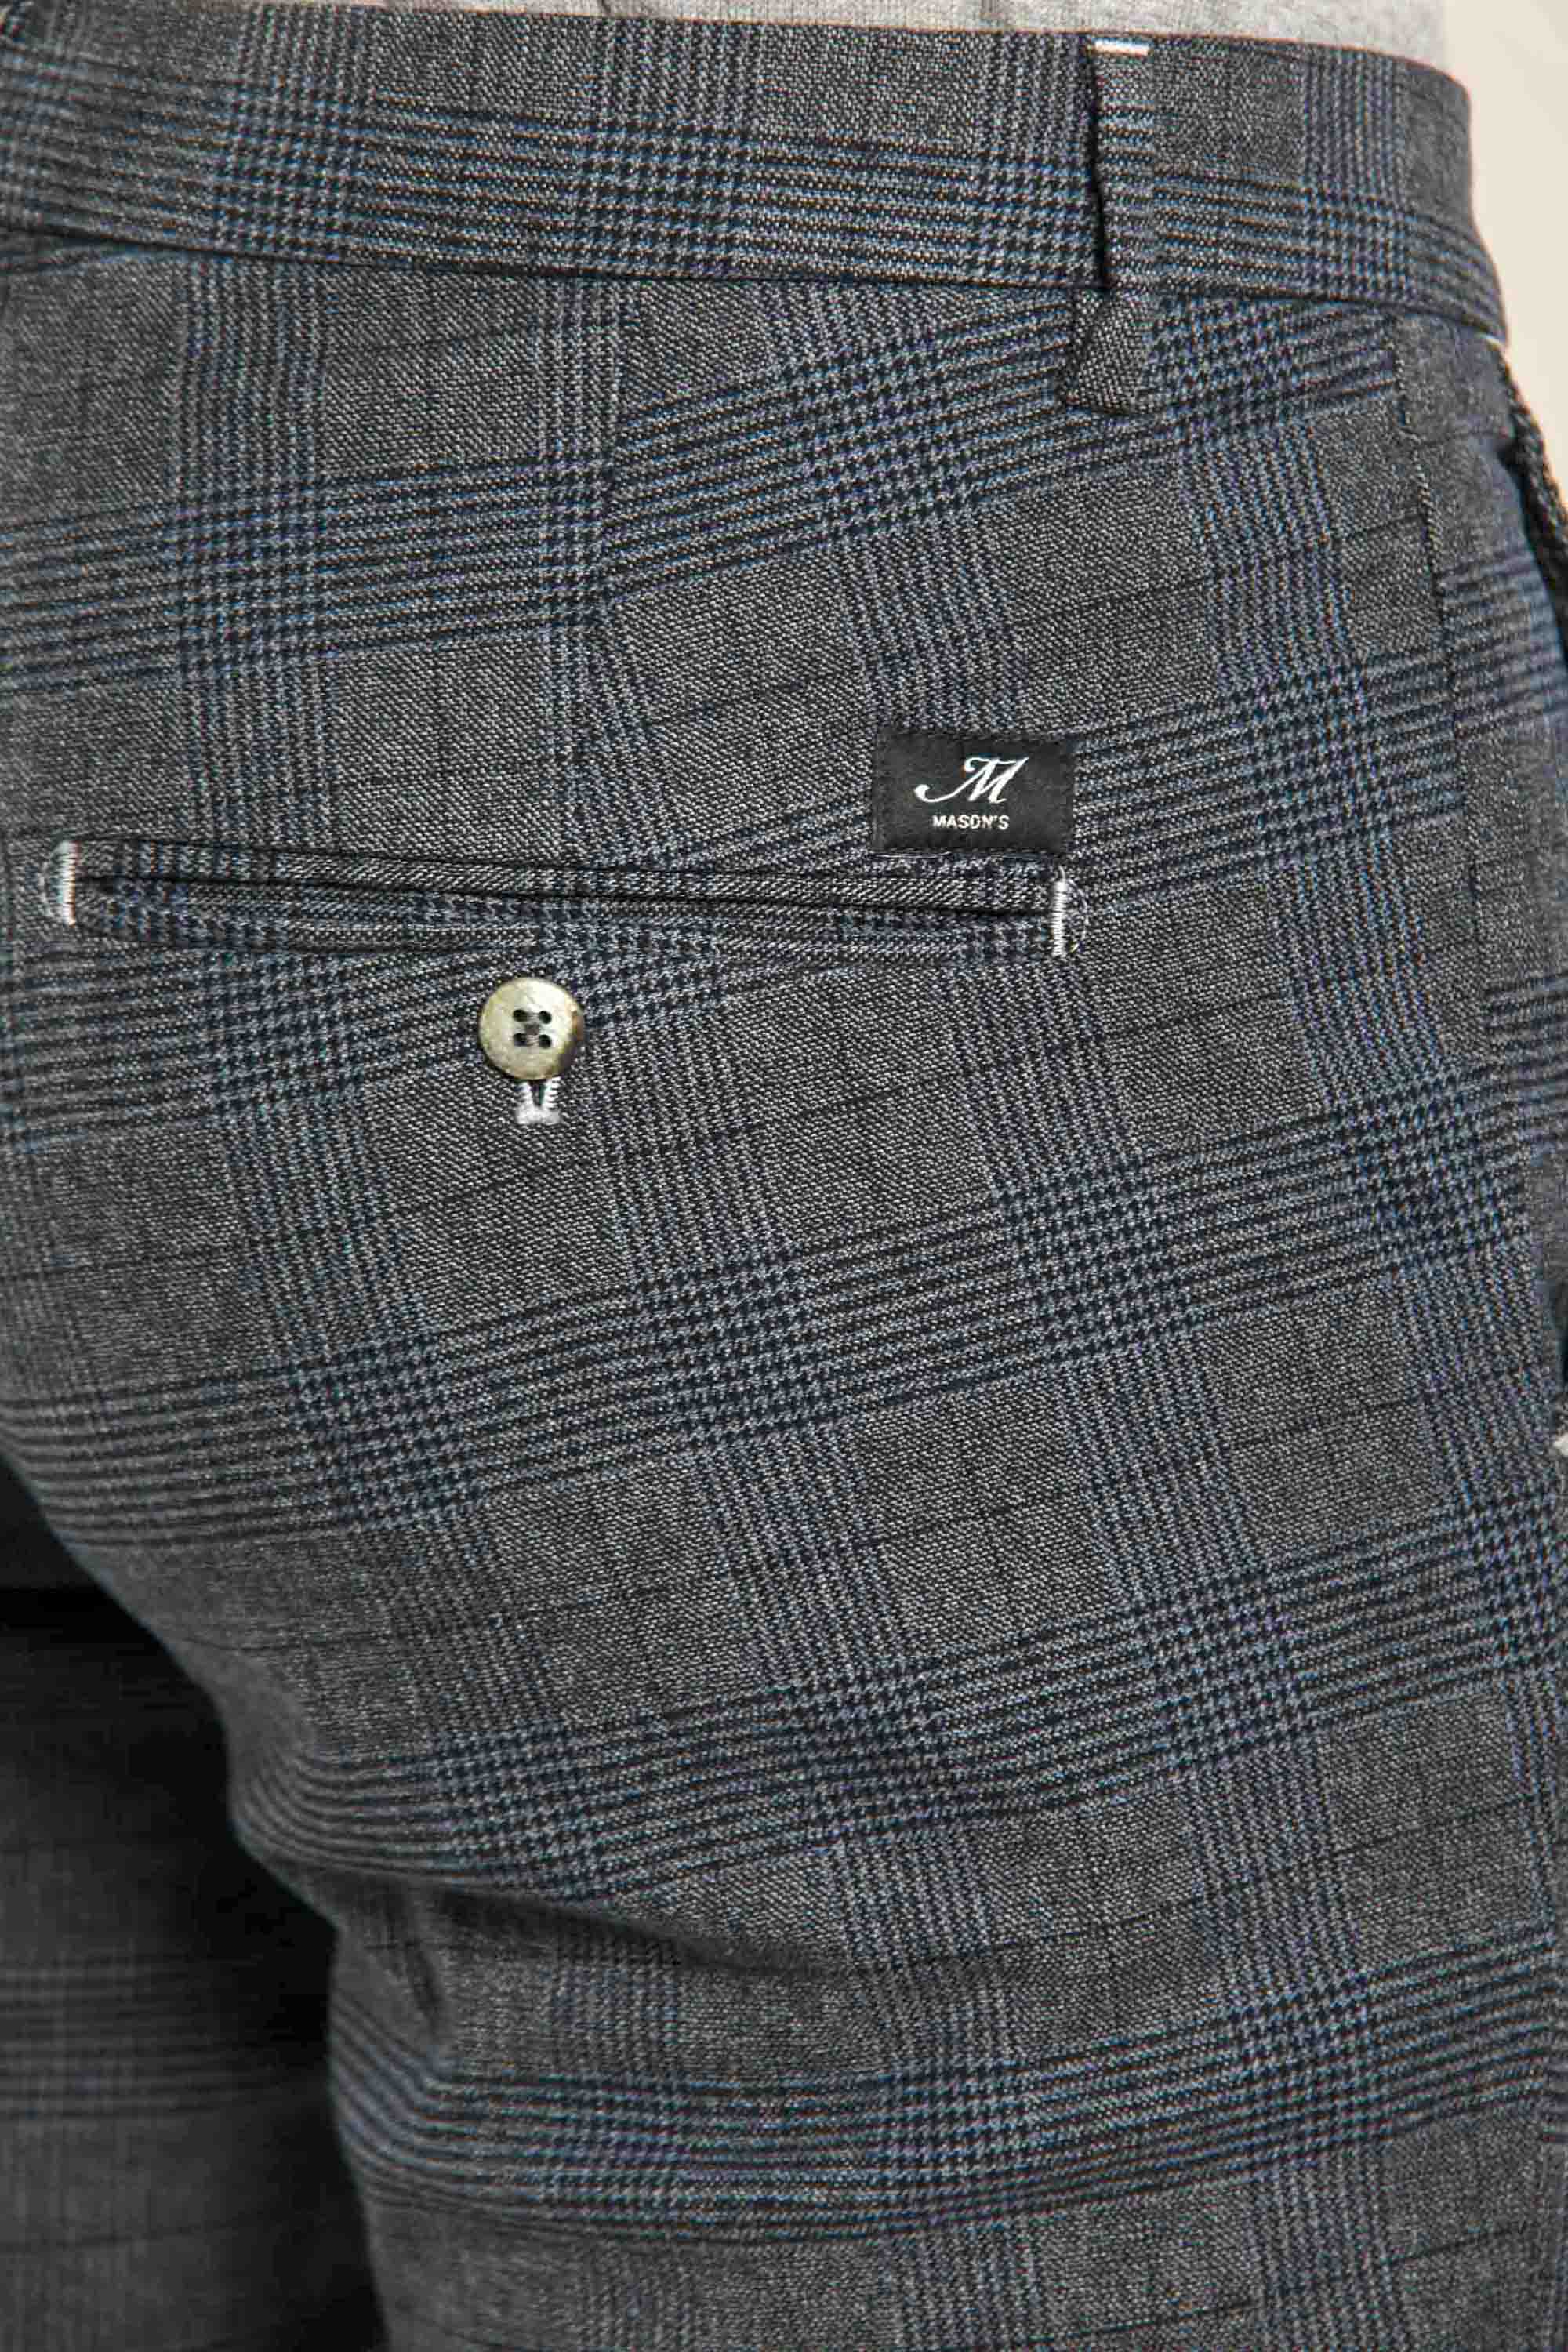 Torino Style Herren-Chinohose mit sanftem Glencheck-Muster schmale Passform